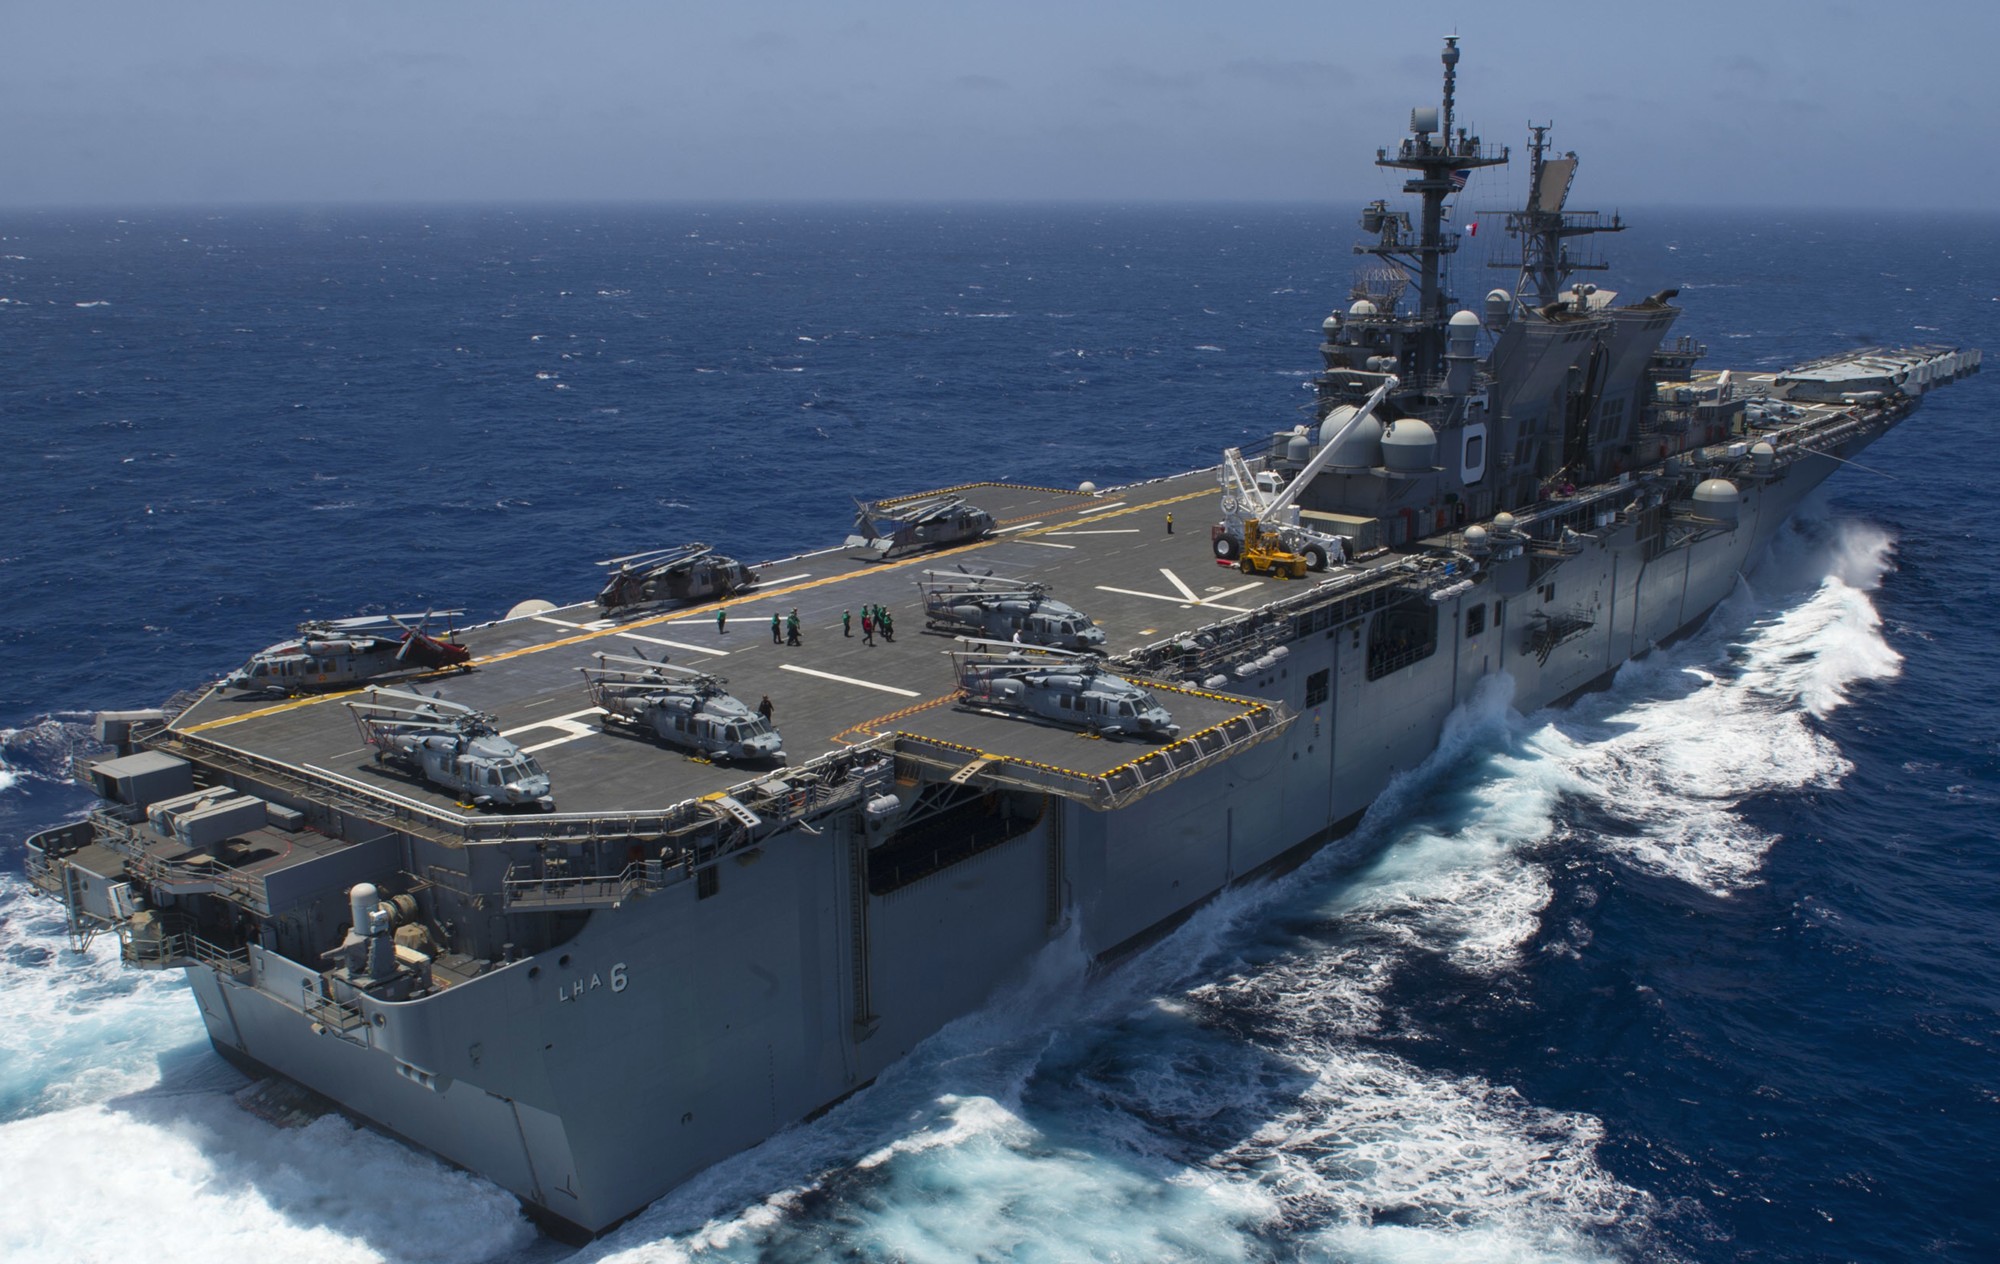 lha-6 uss america amphibious assault ship landing us navy 67